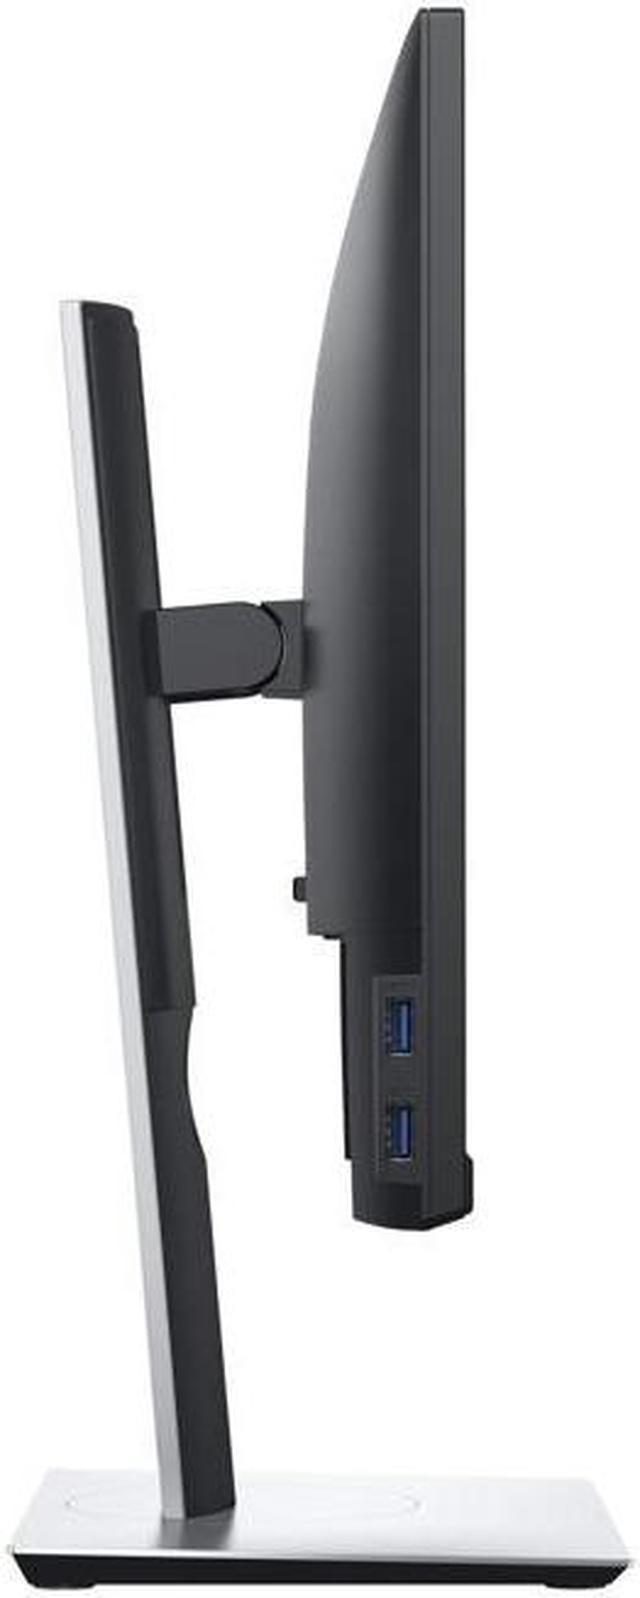 Monitor Dell P2217H- 21.5- 1920x108 - VGA- DisplayPort- USB-  Reacondicionado.